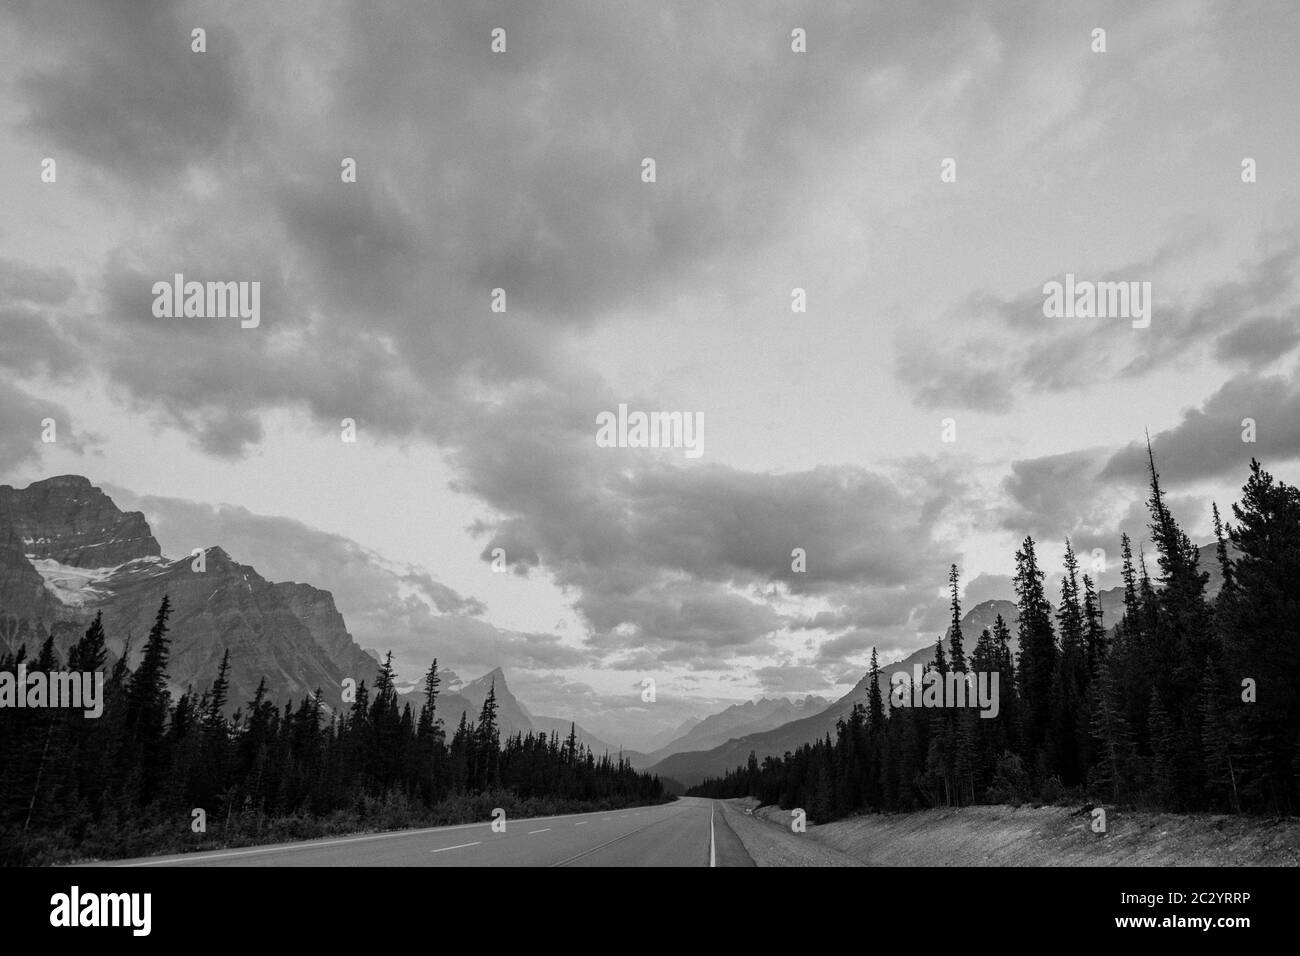 Road passing through Banff National Park landscape against cloudy sky, Banff, Alberta, Canada Stock Photo